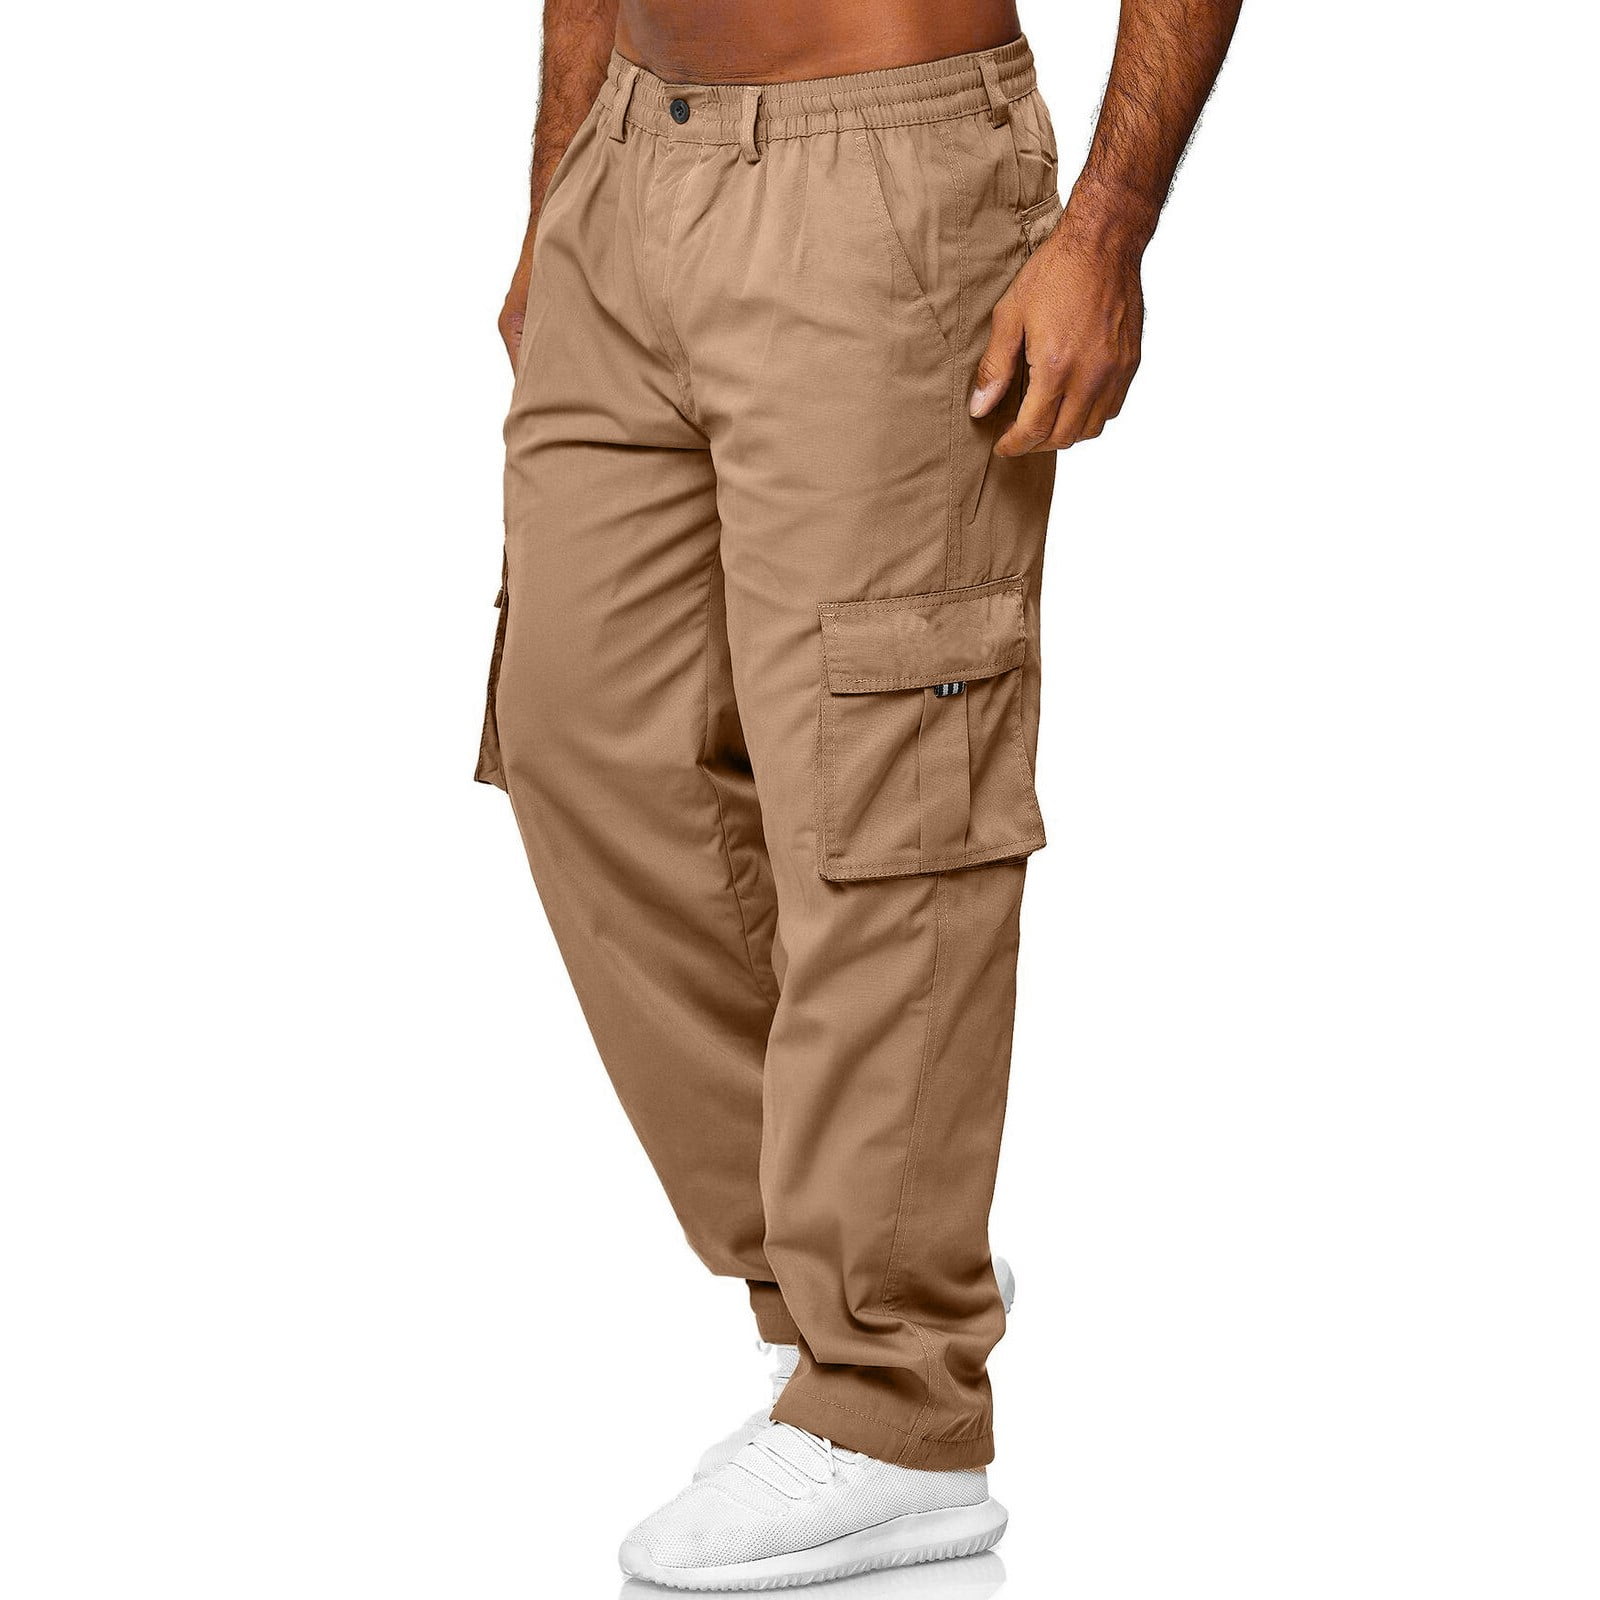 Aayomet Mens Cargo Pants Men's Sweatpants Casual Lounge Cotton Pajama ...